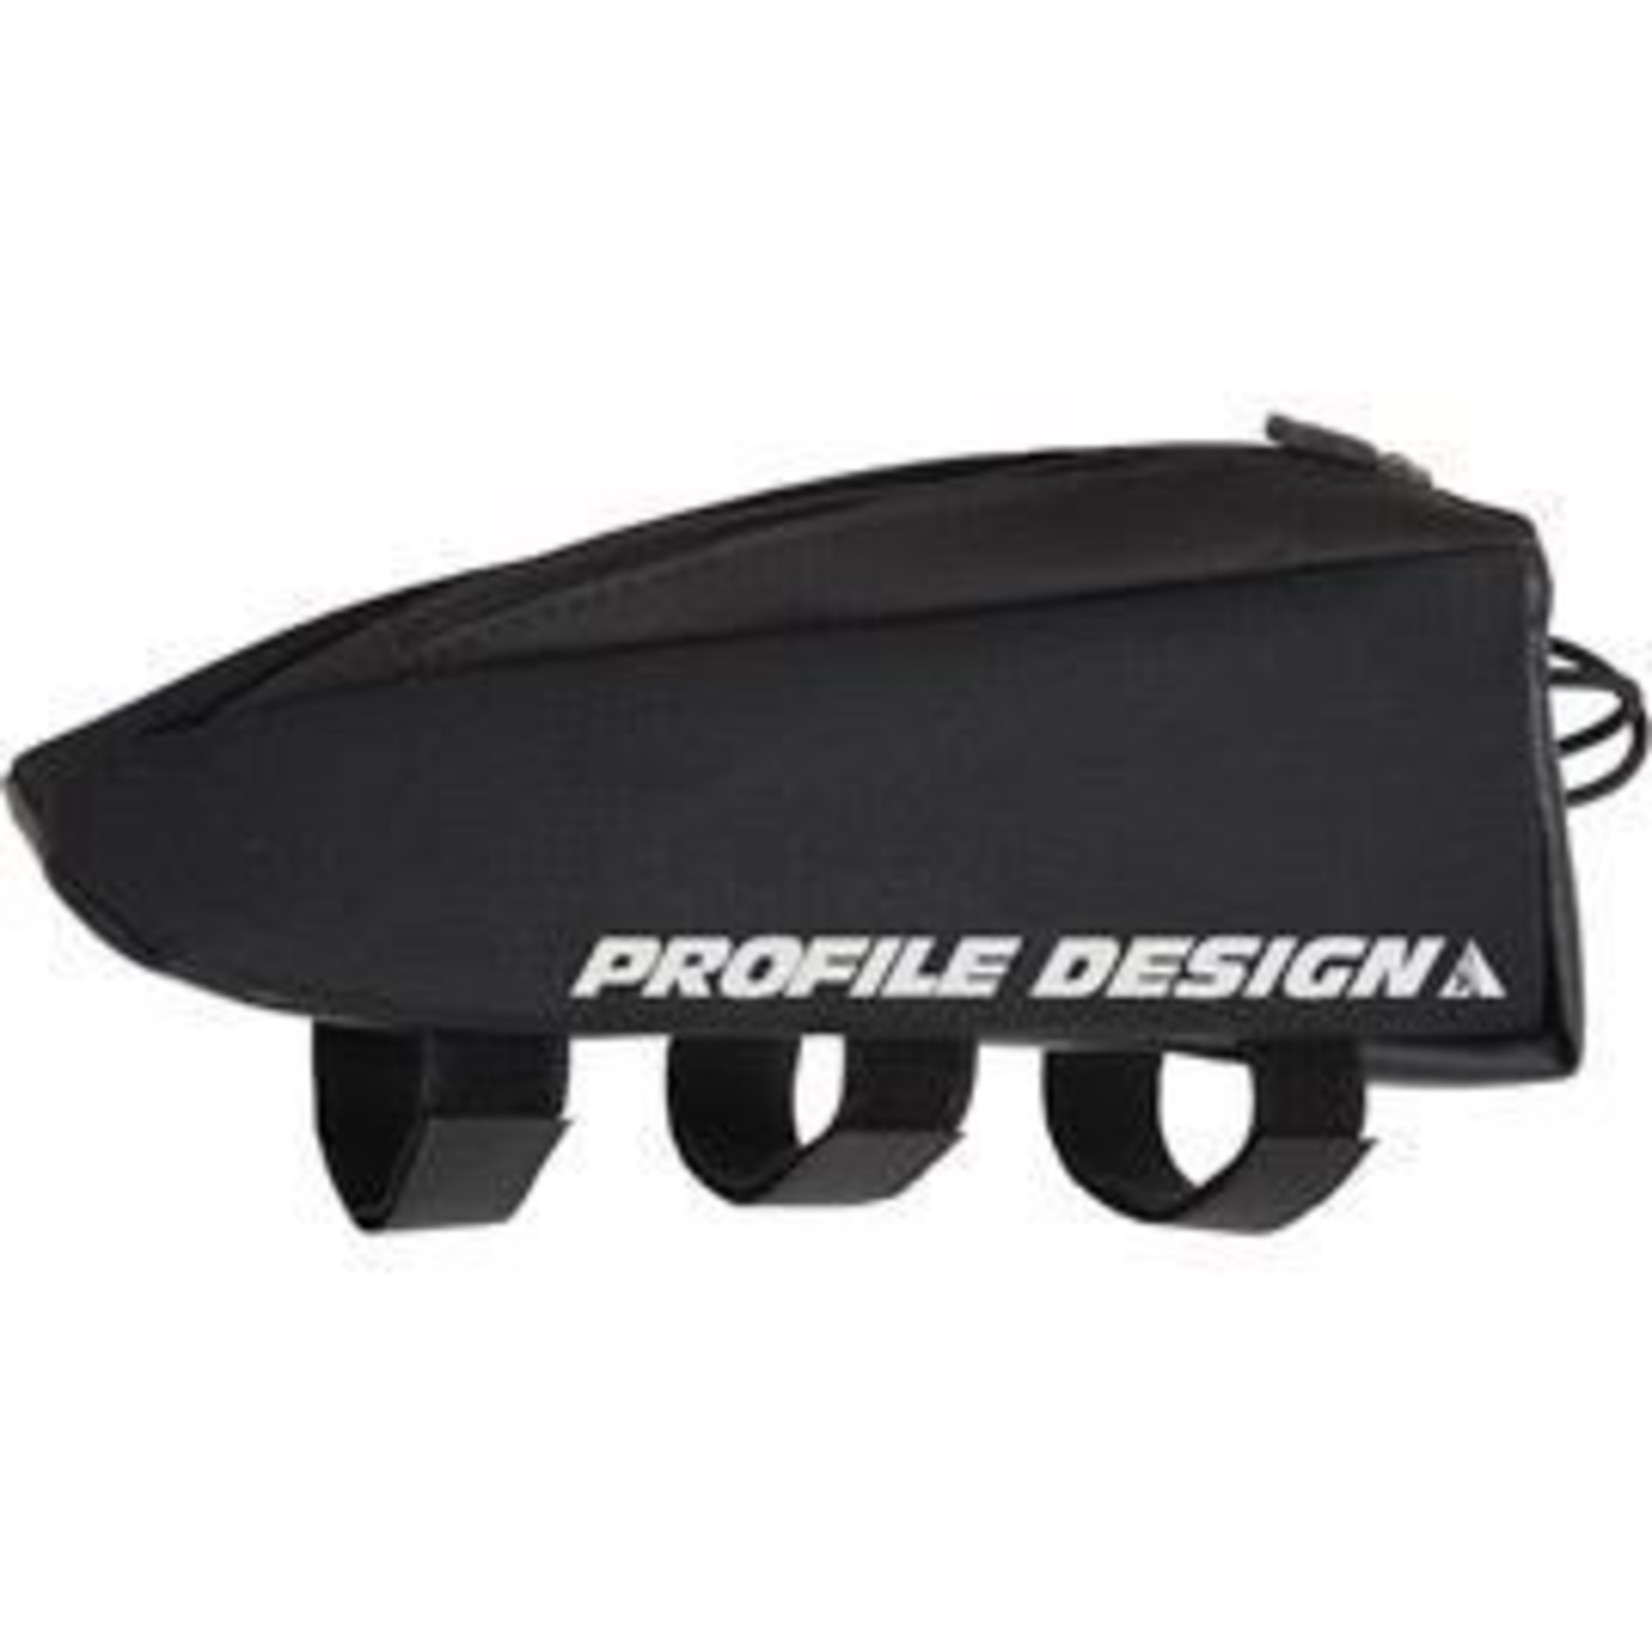 profile design Profile Design Aero E-Pack Standard-Top Tube Bag Large - 240mm (378cm3) - Black